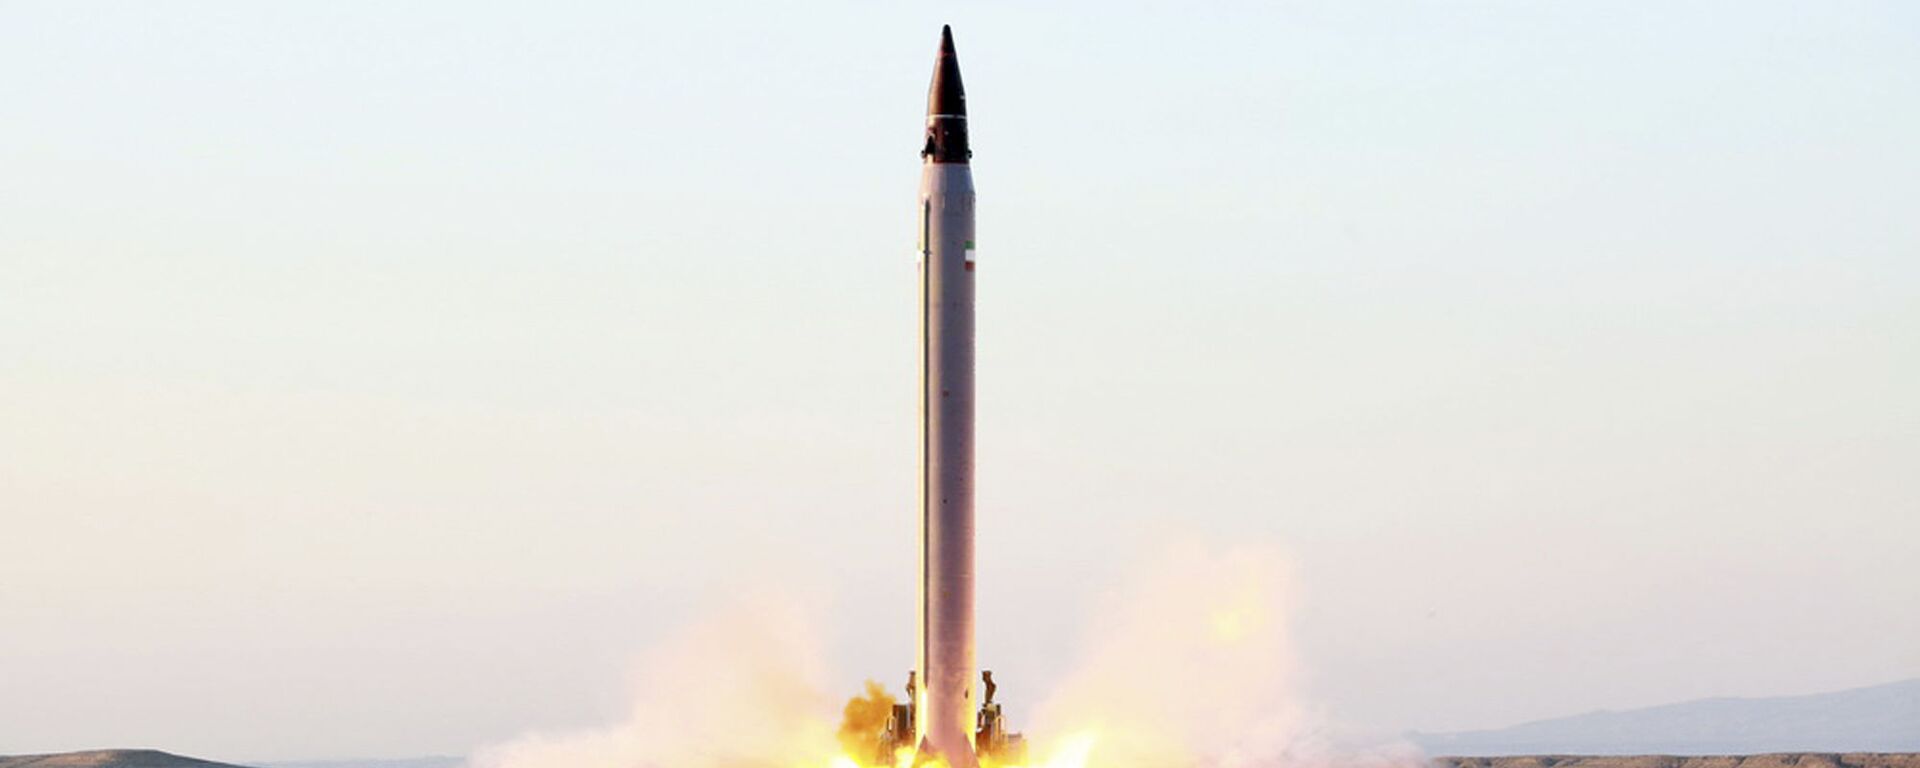 إطلاق صاروخ بالستي إيراني - سبوتنيك عربي, 1920, 18.07.2022